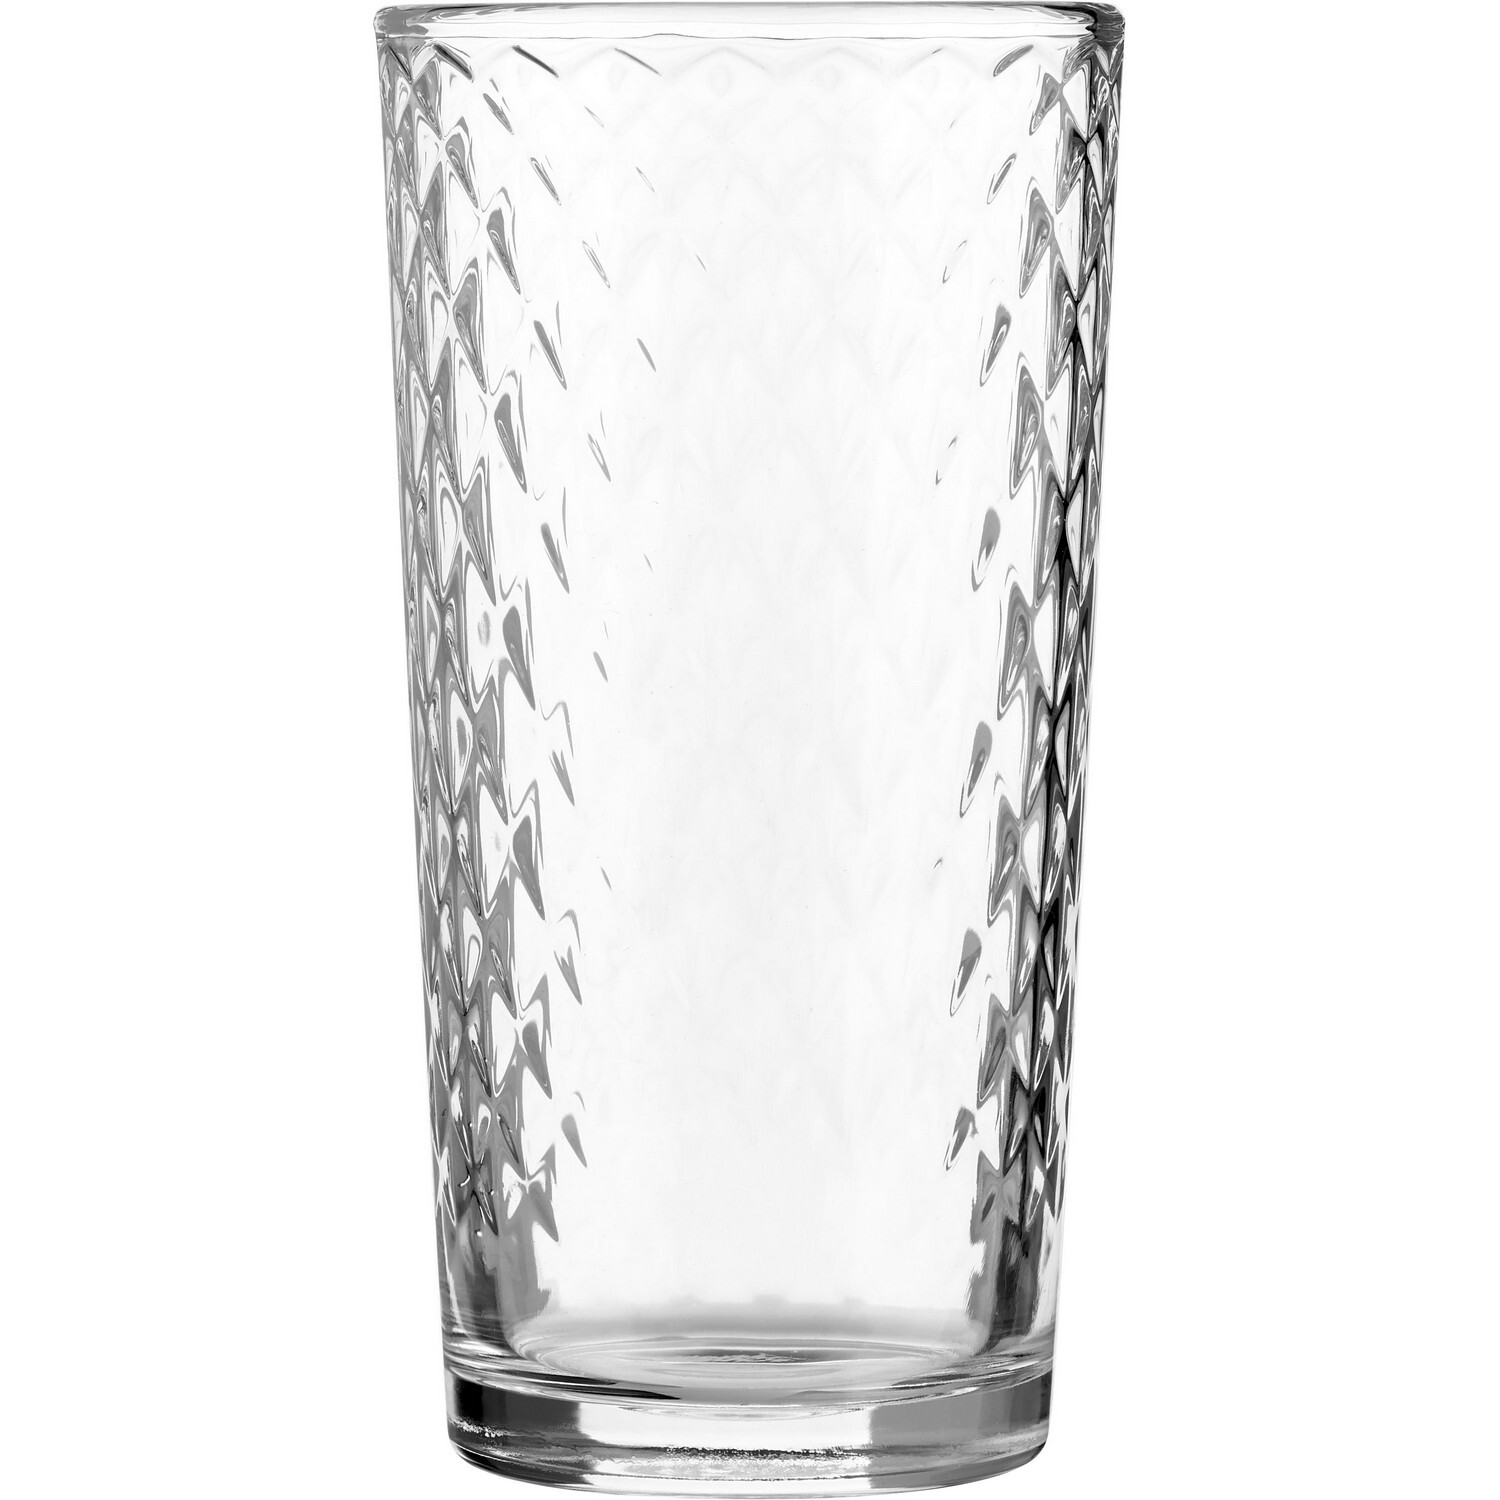 Хайбол Osz Кристалл 230мл, 65х65х126мм, стекло, прозрачный